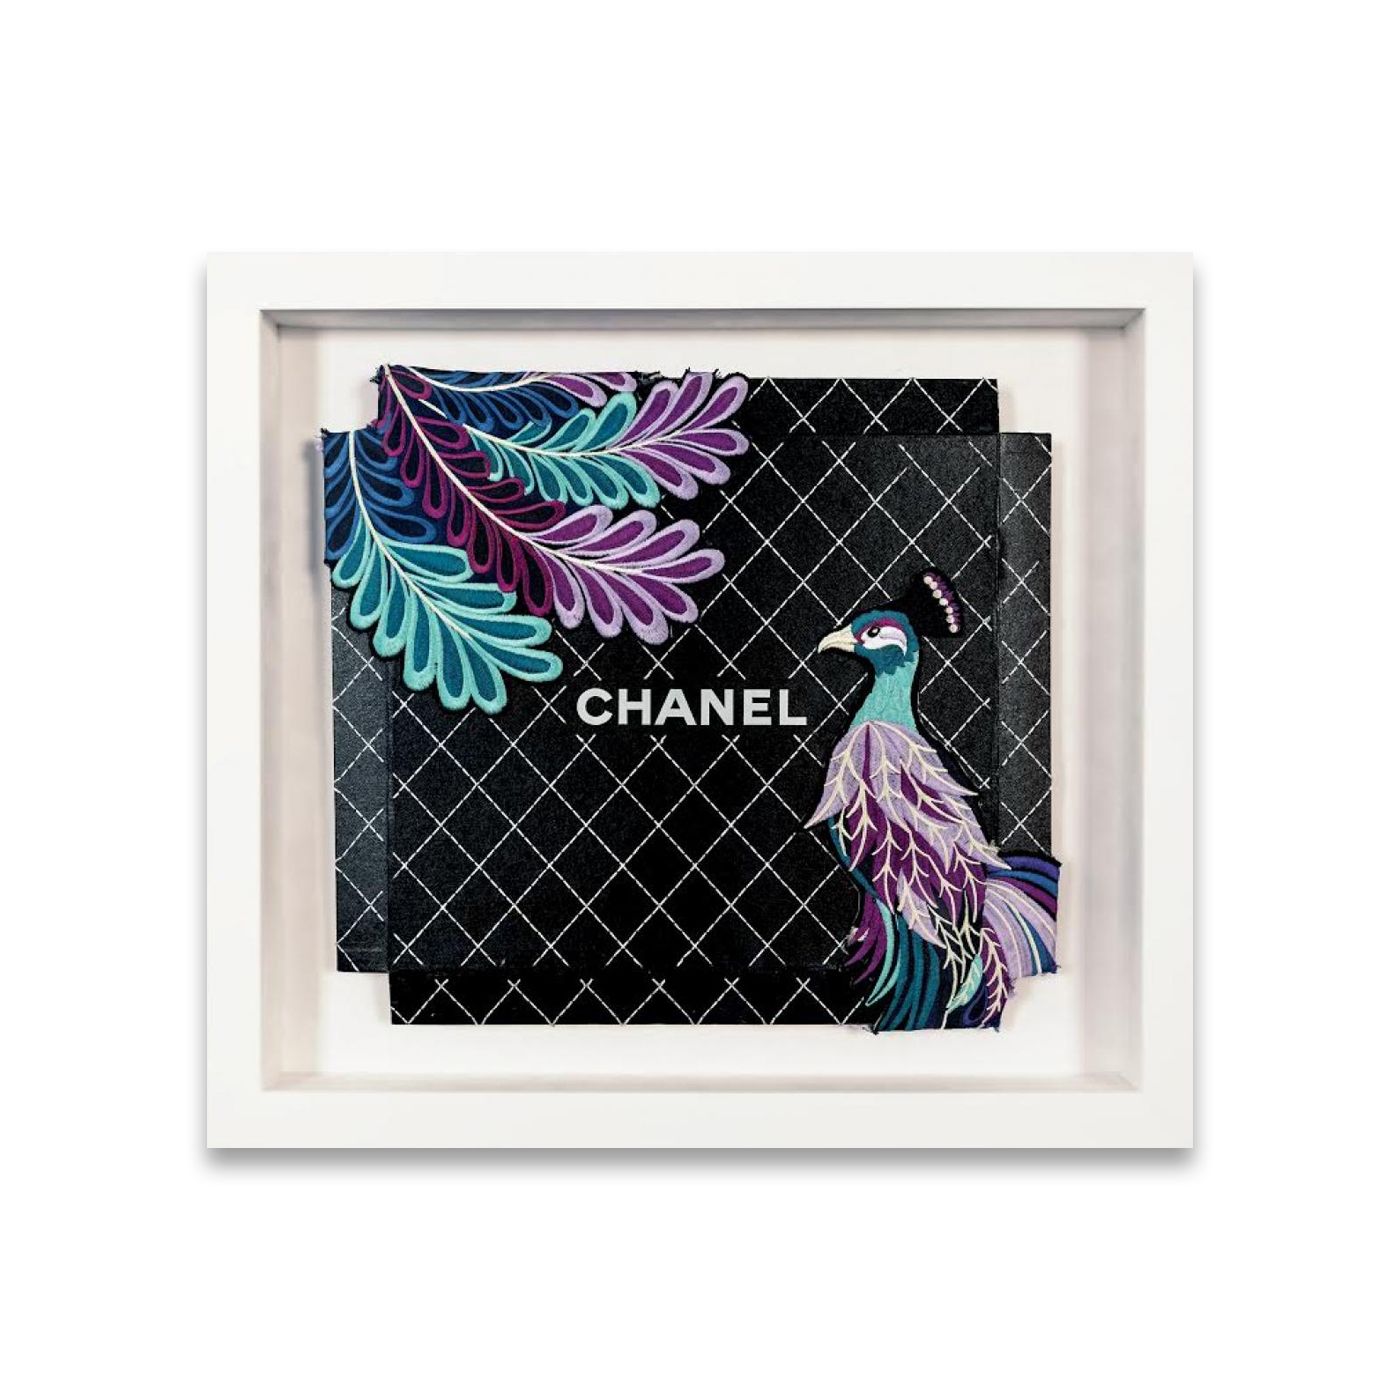 Stephen Wilson - Chanel Peacock | Exhibit by Aberson